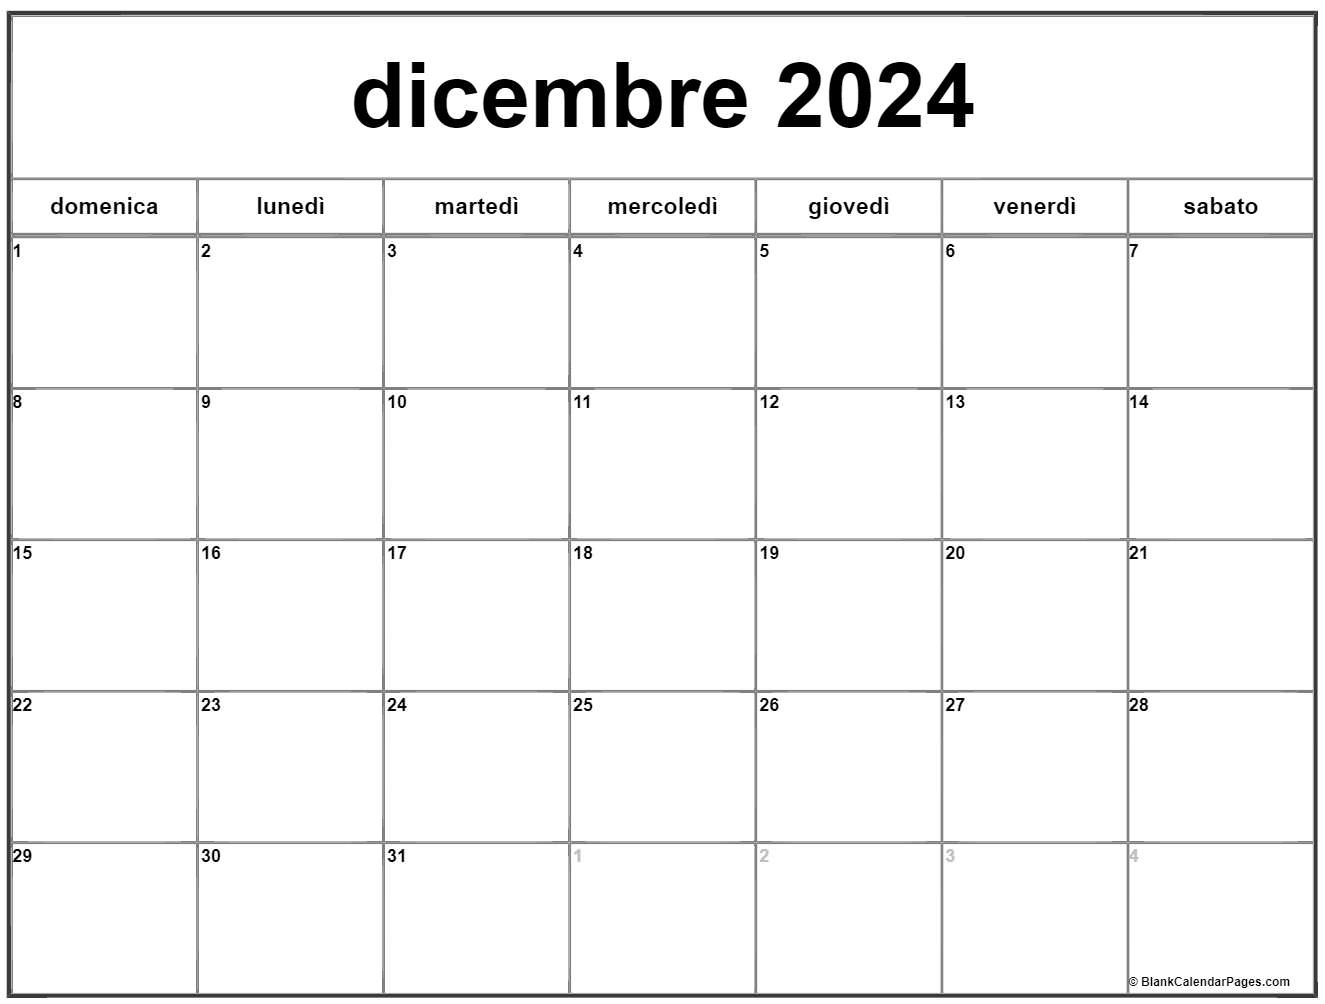 dicembre 2024 calendario gratis italiano